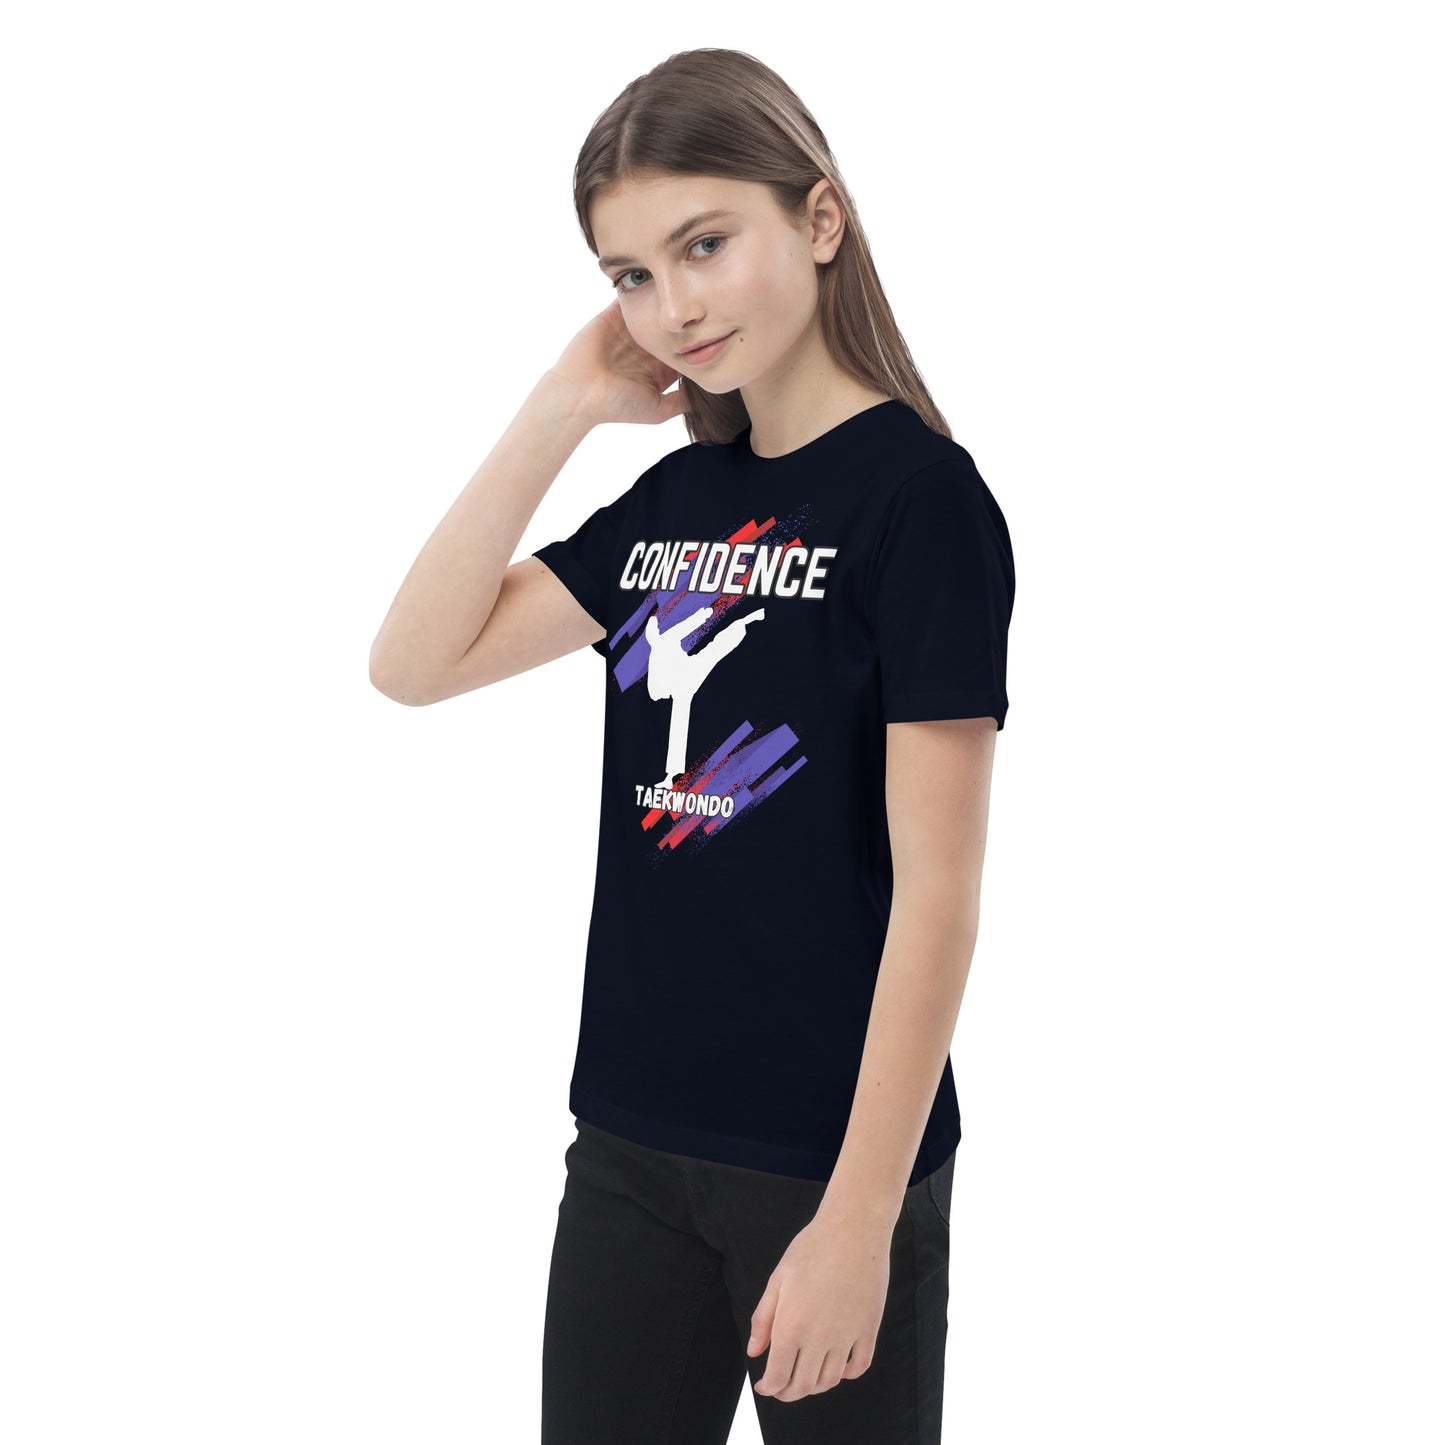 Organic cotton kids Taekwondo Theme t-shirt : Confidence